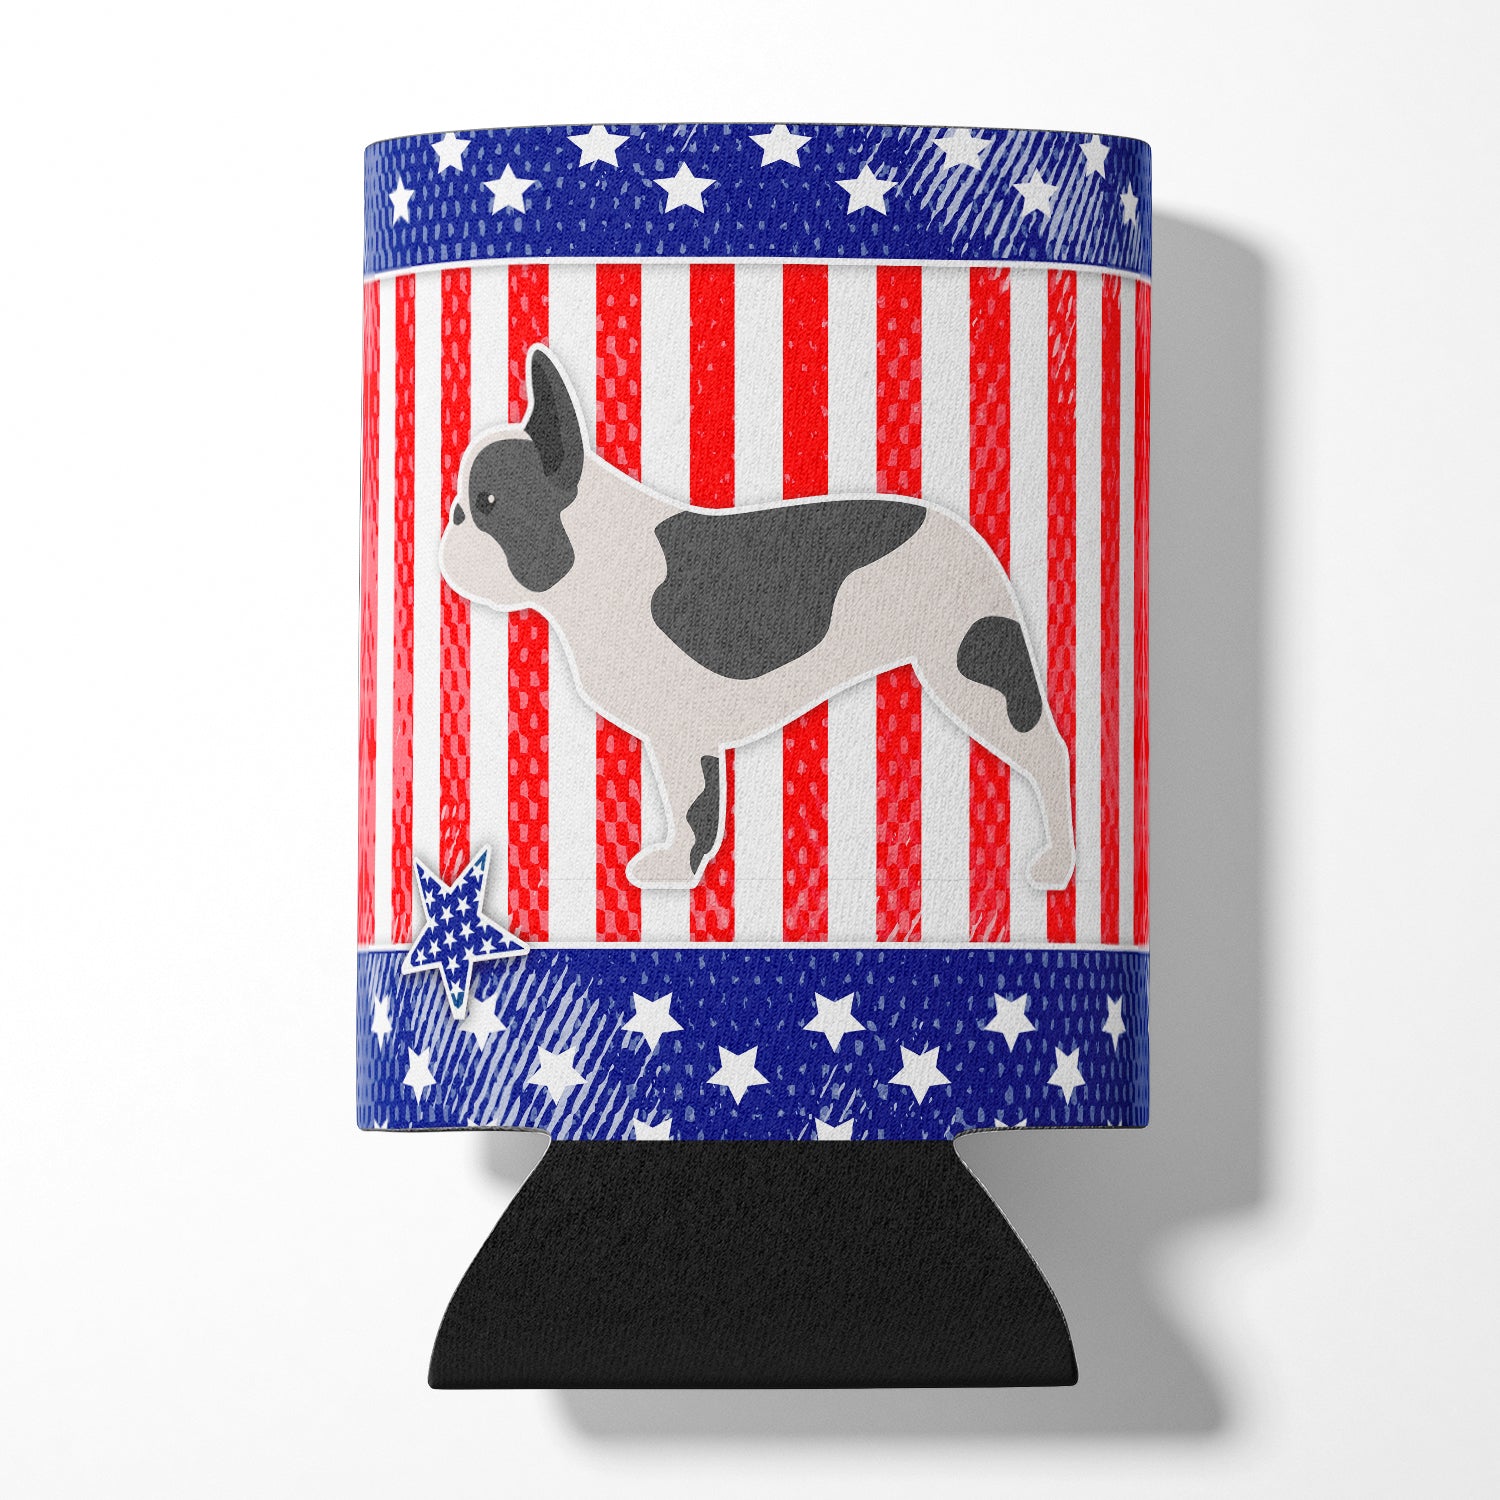 USA Patriotic French Bulldog Can or Bottle Hugger BB3341CC